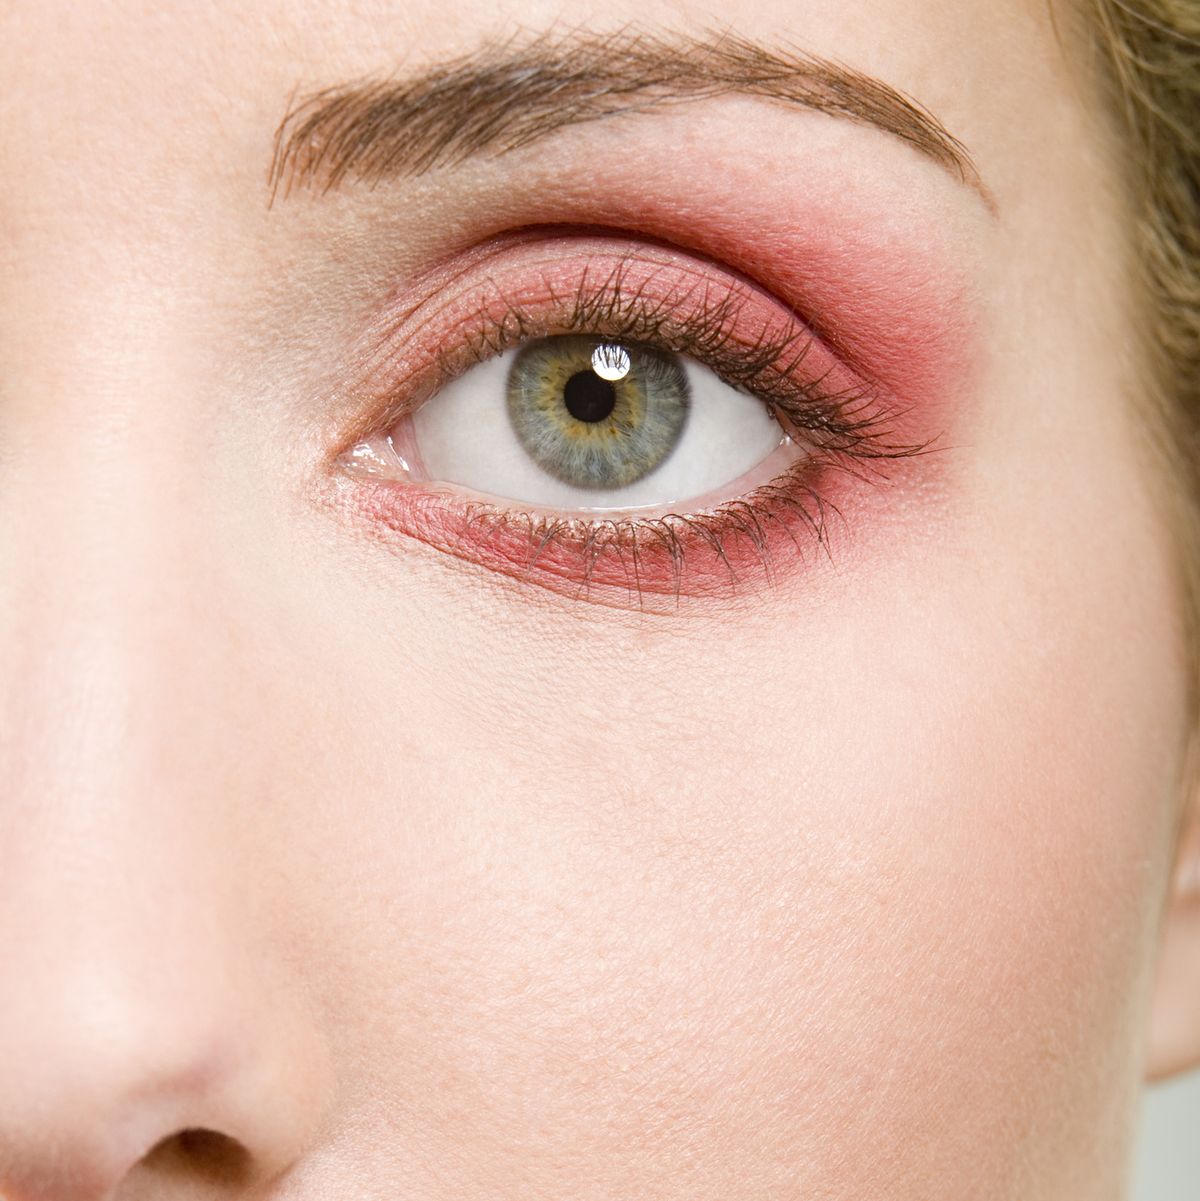 Blepharitis Sore Itchy Red Eye